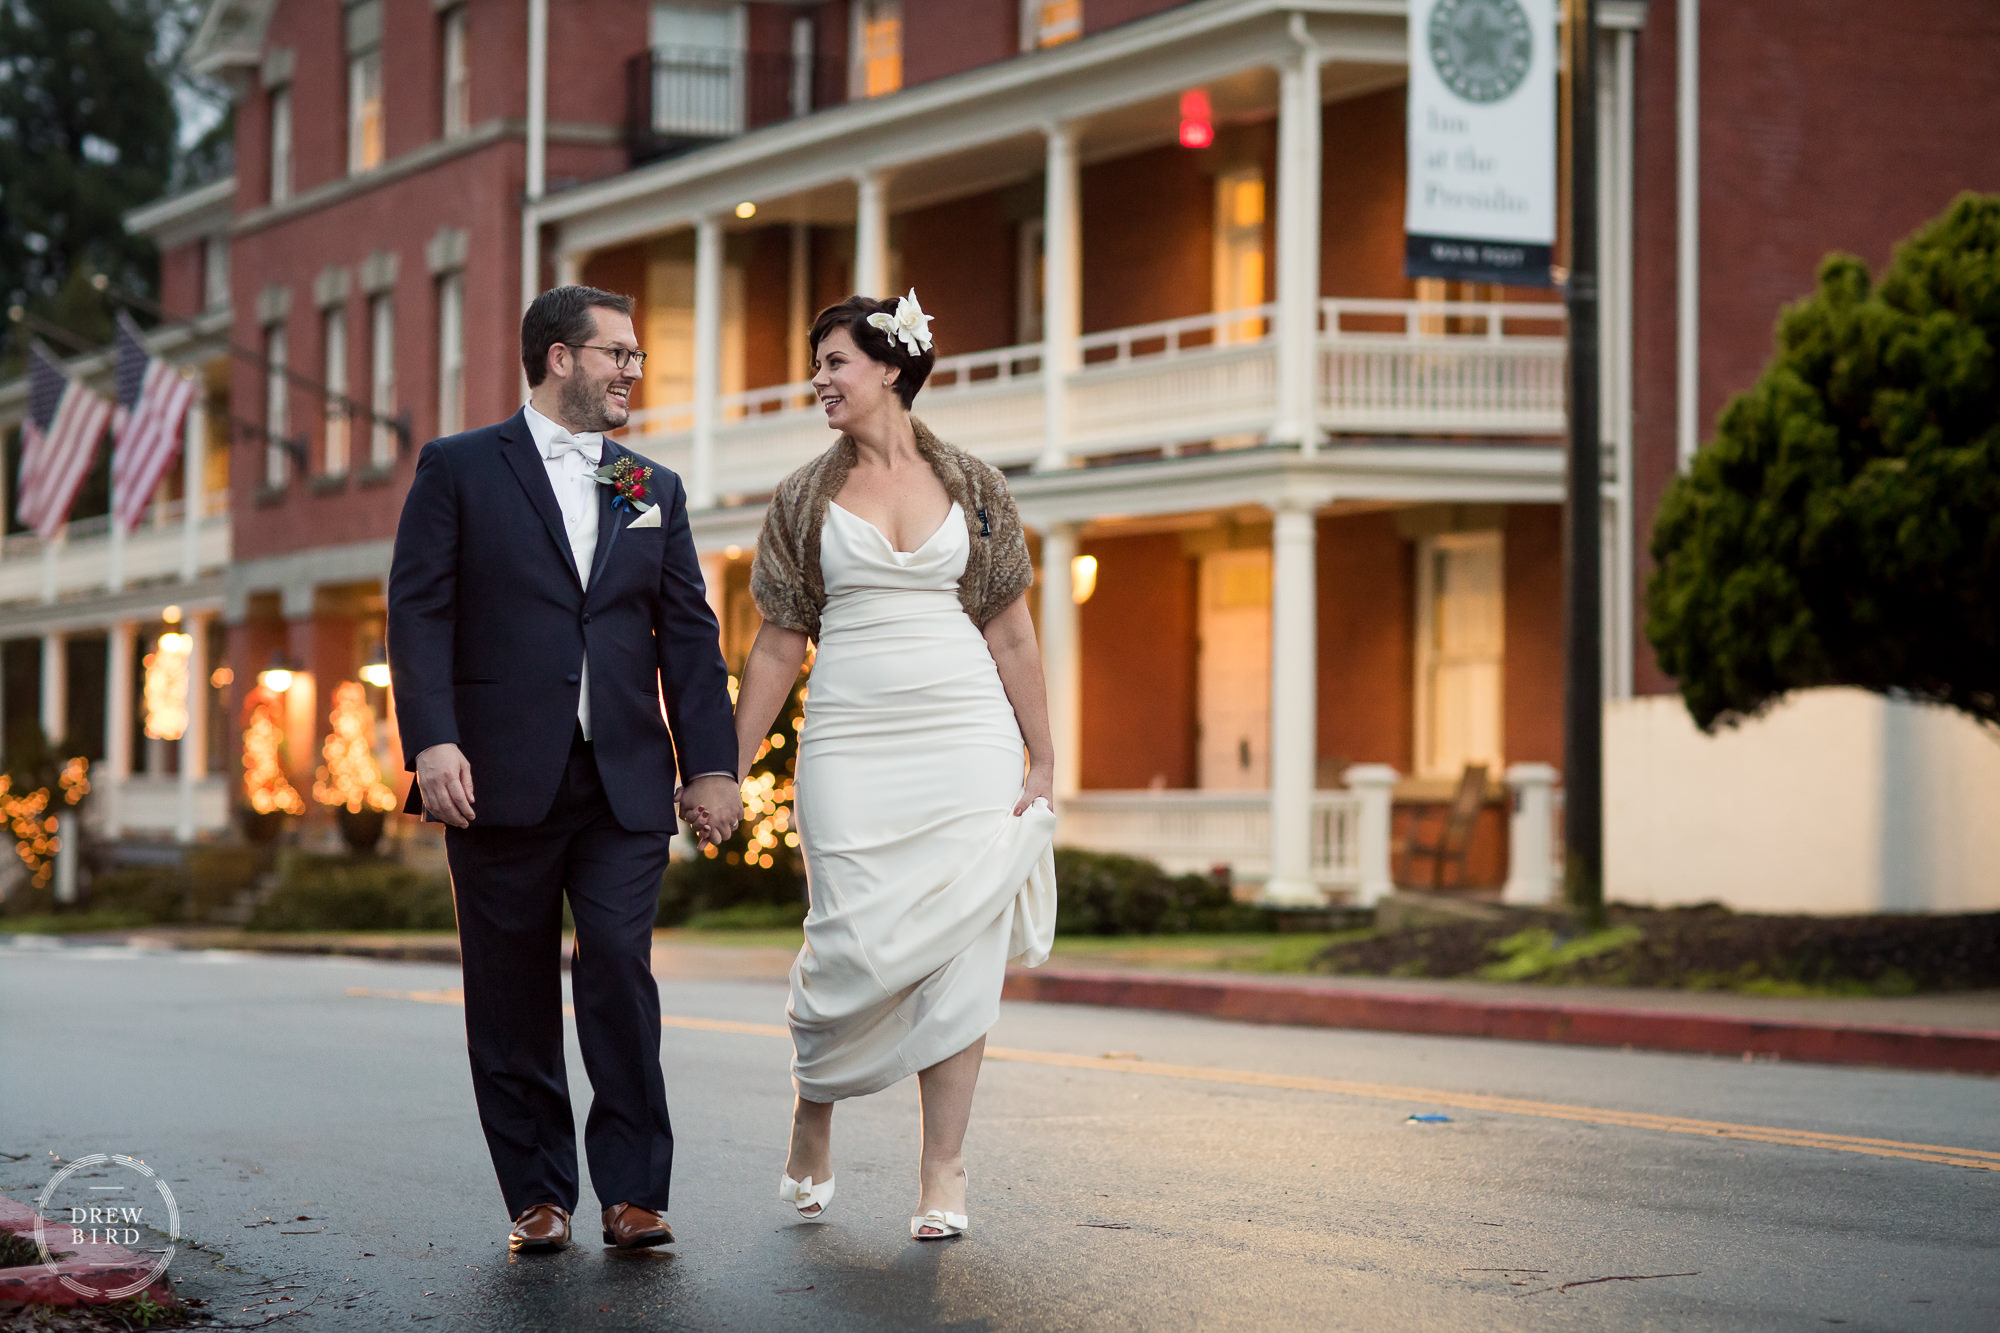 Bride and groom walking in street. The Inn at the Presidio wedding venue in San Francisco.